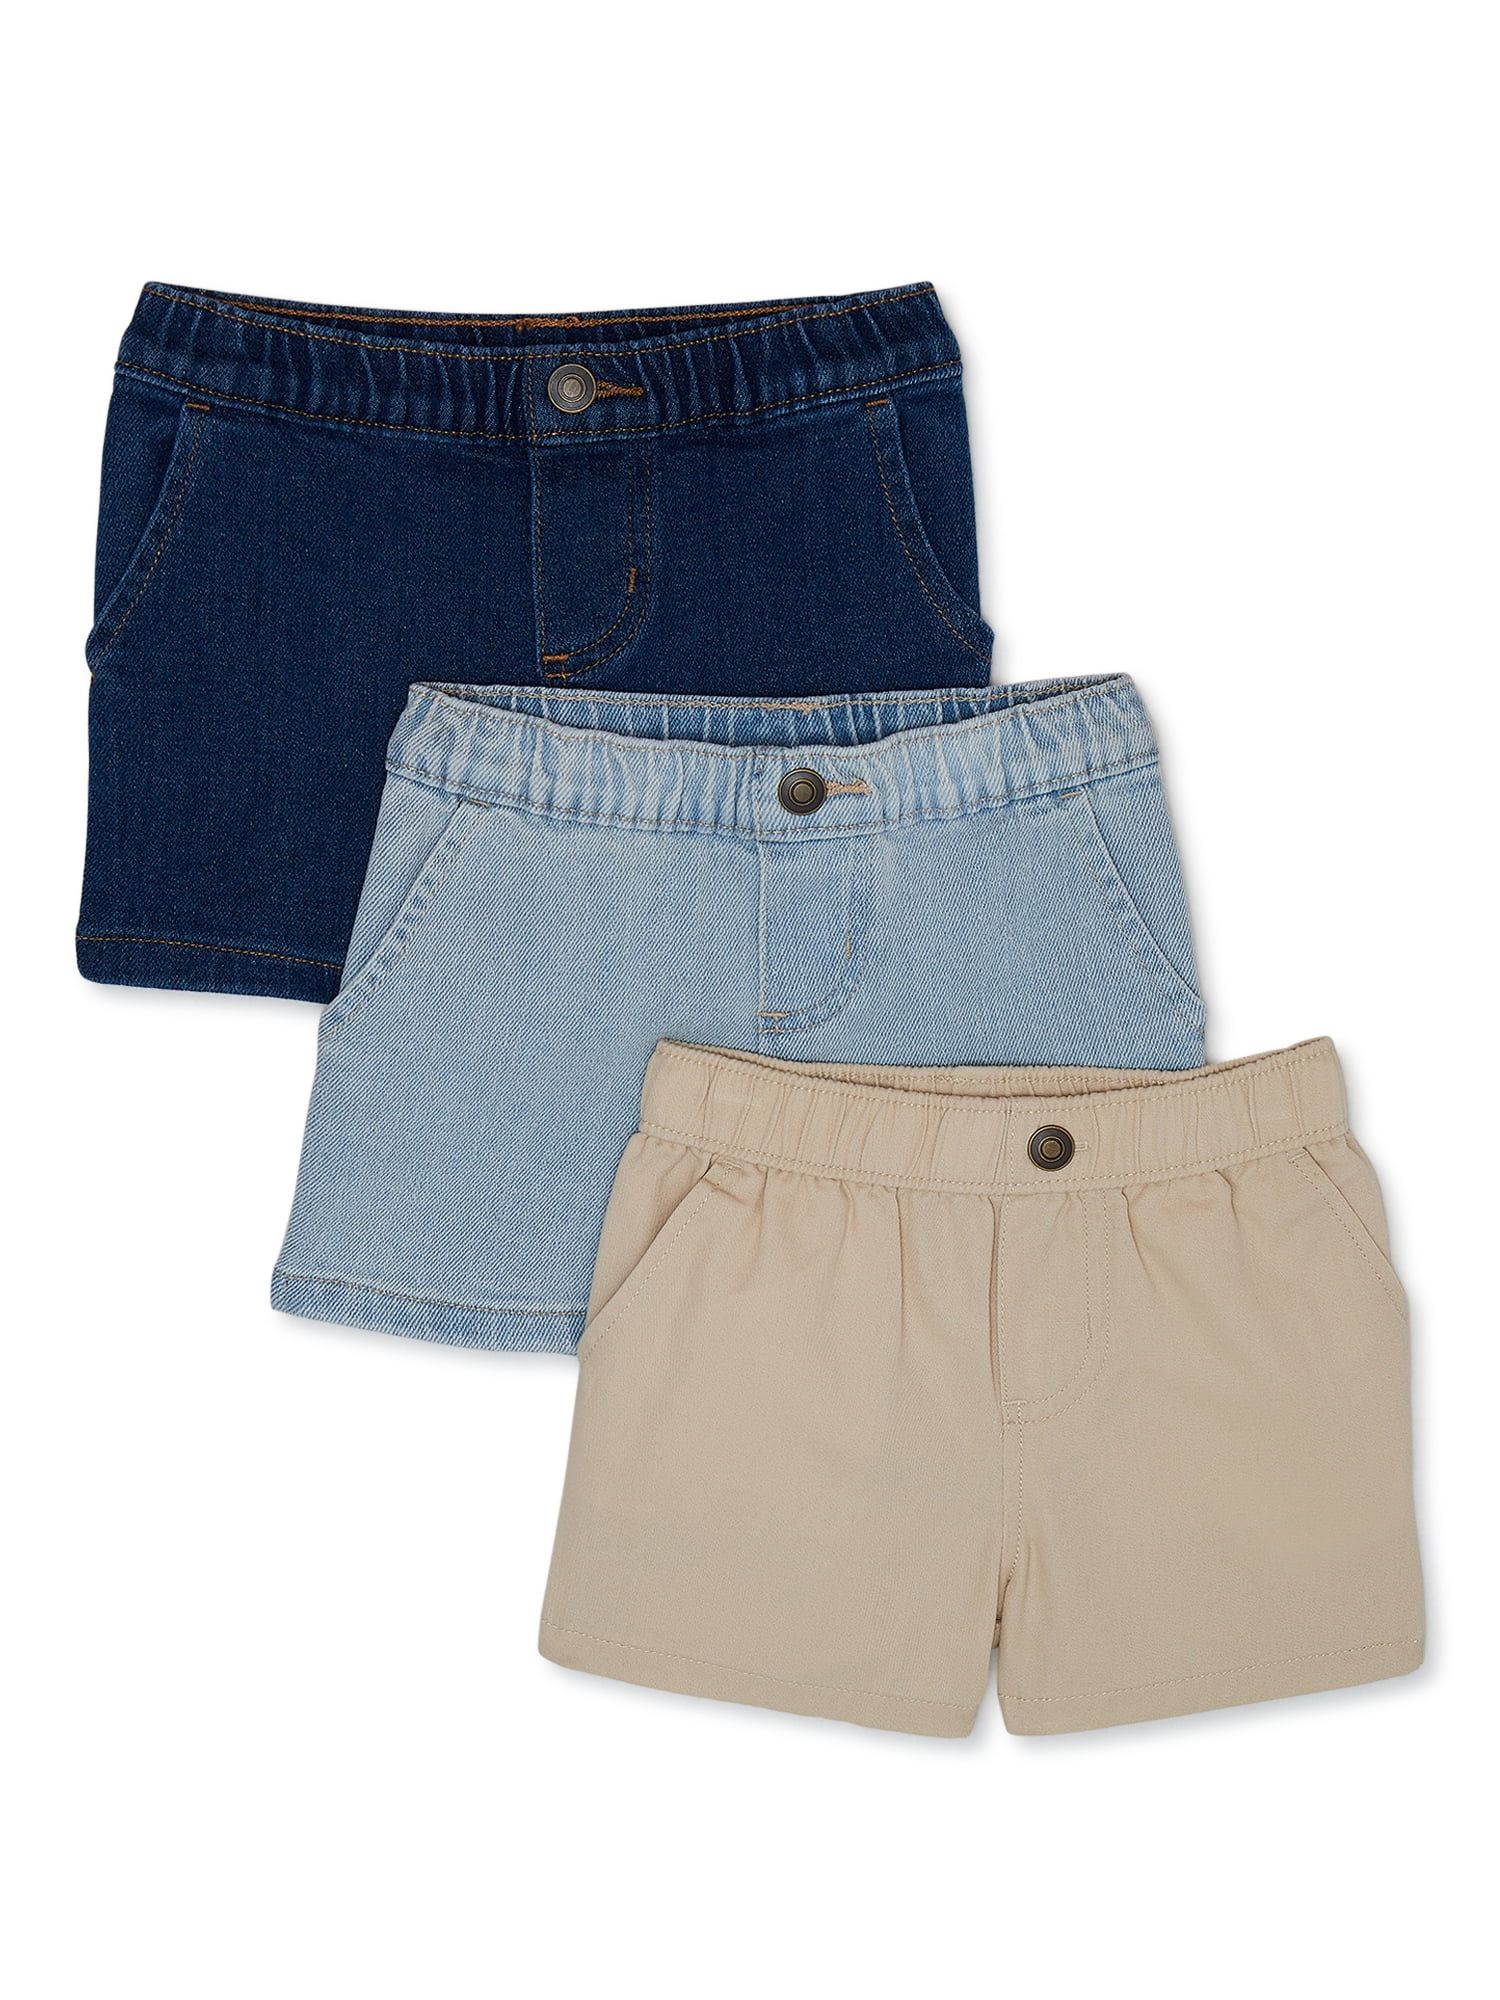 Garanimals Baby Boy Woven Shorts Multipack, 3-Pack, Sizes 0-24 Months | Walmart (US)